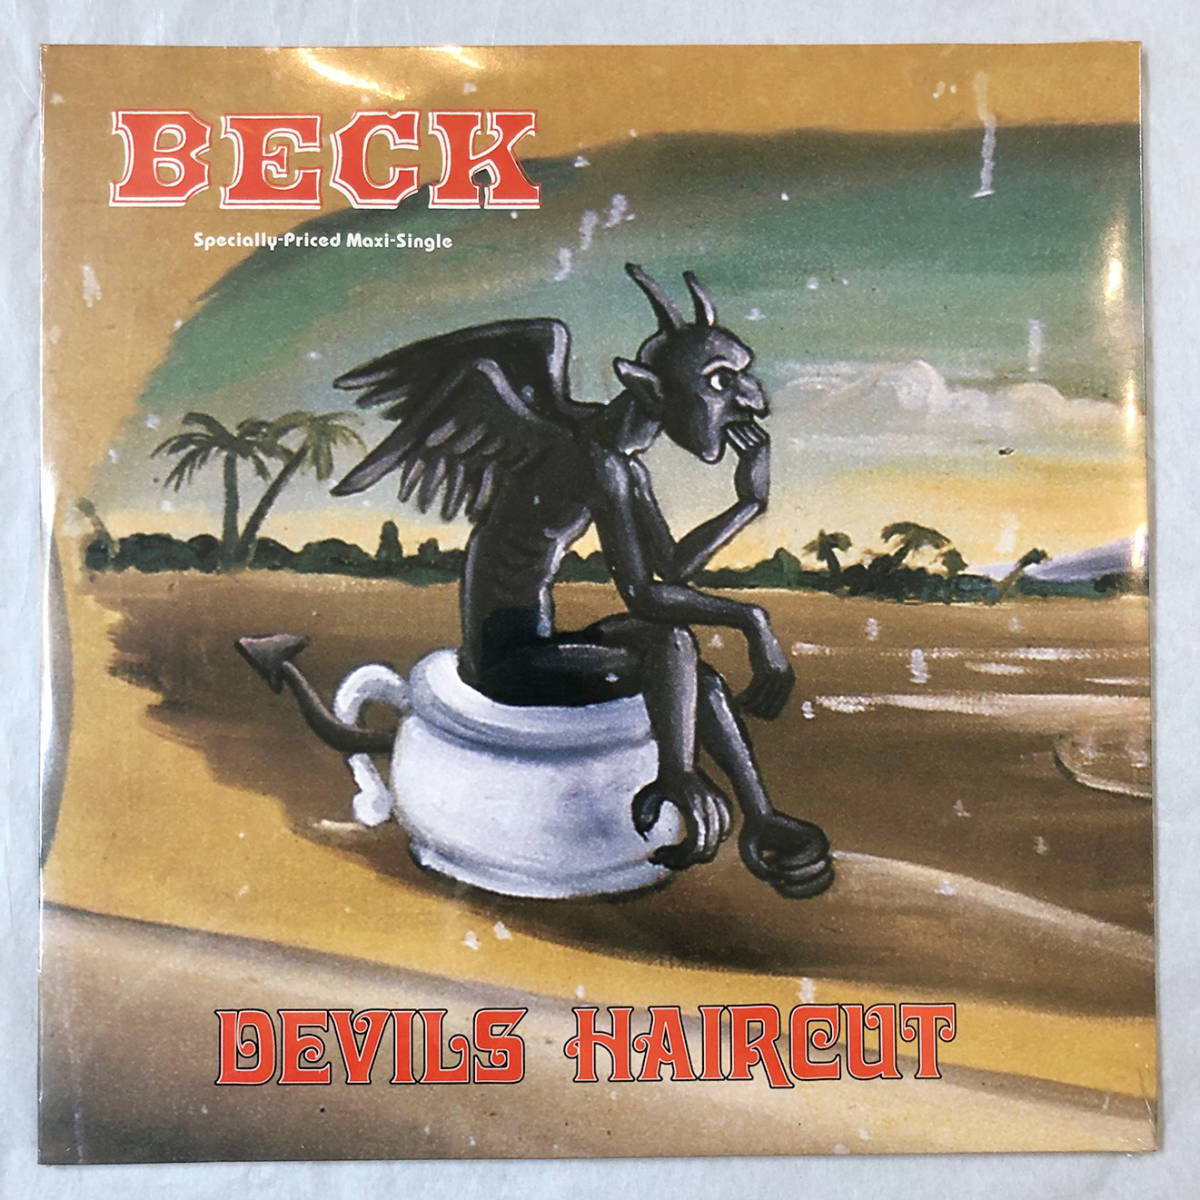 #1996 year US record original new goods shield Beck - Devils Haircut 12~EP DGC12-22222 DGC